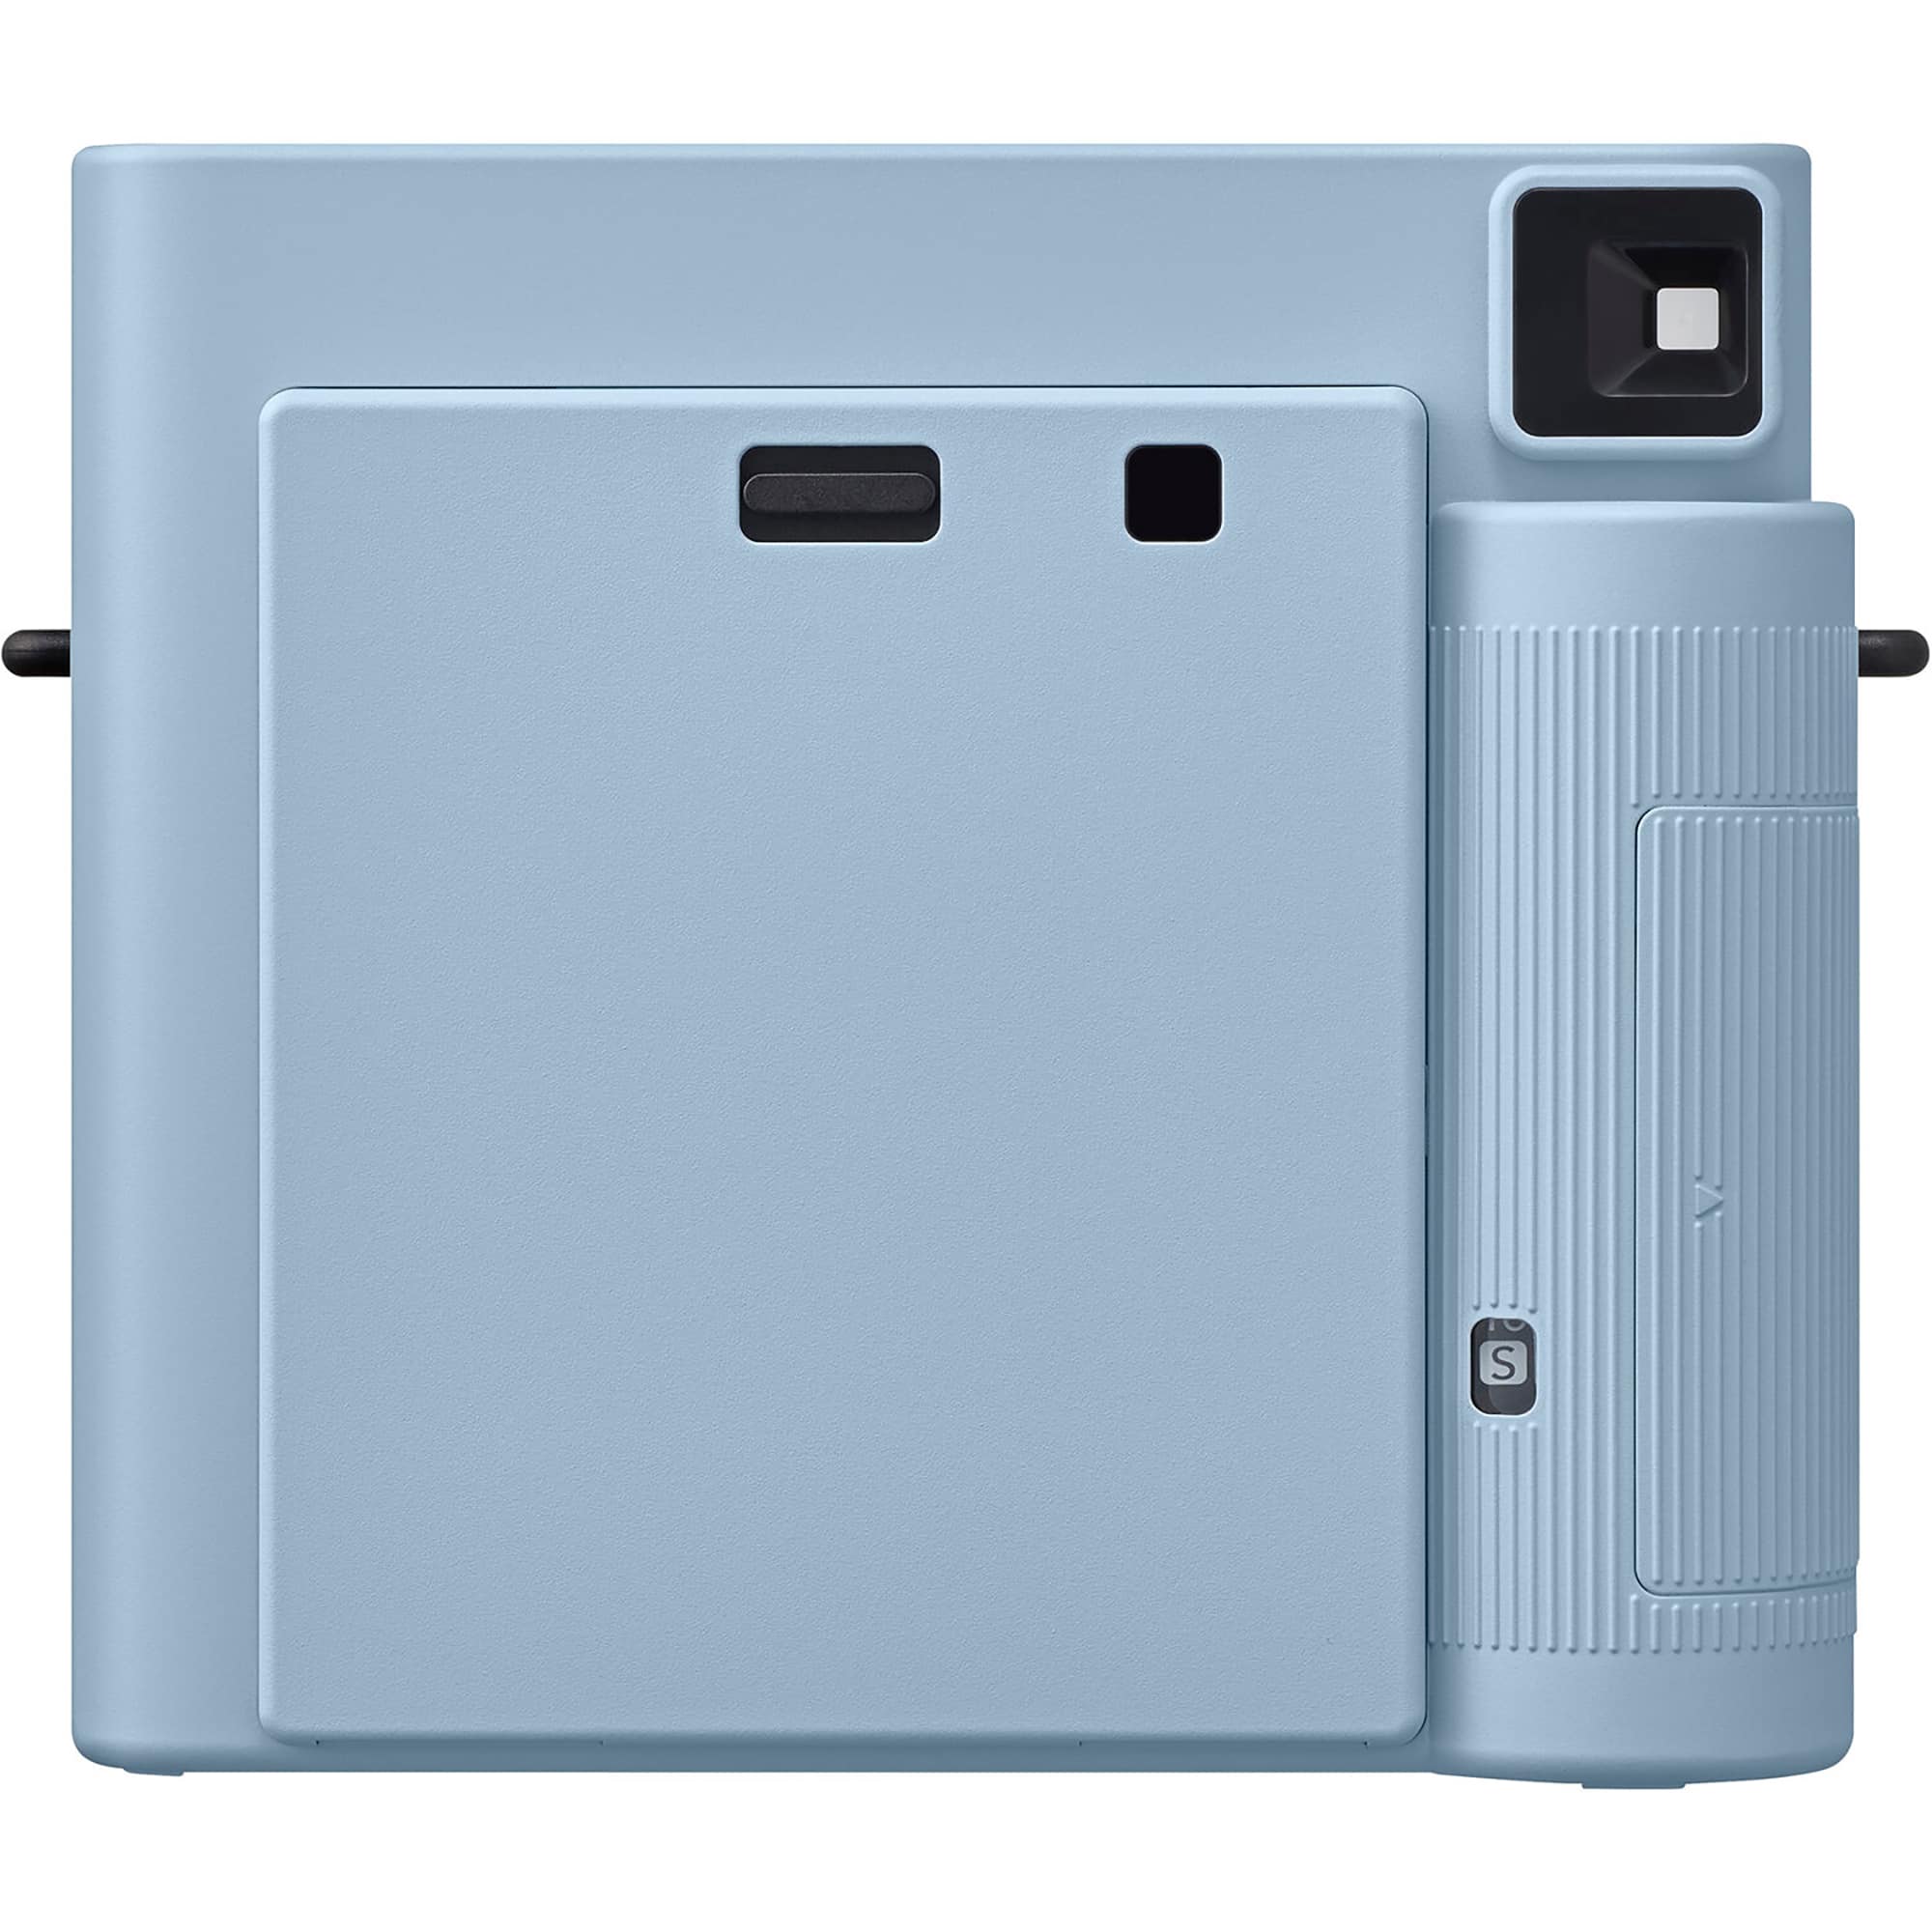 Instax Square SQ1 Blue Instant Camera